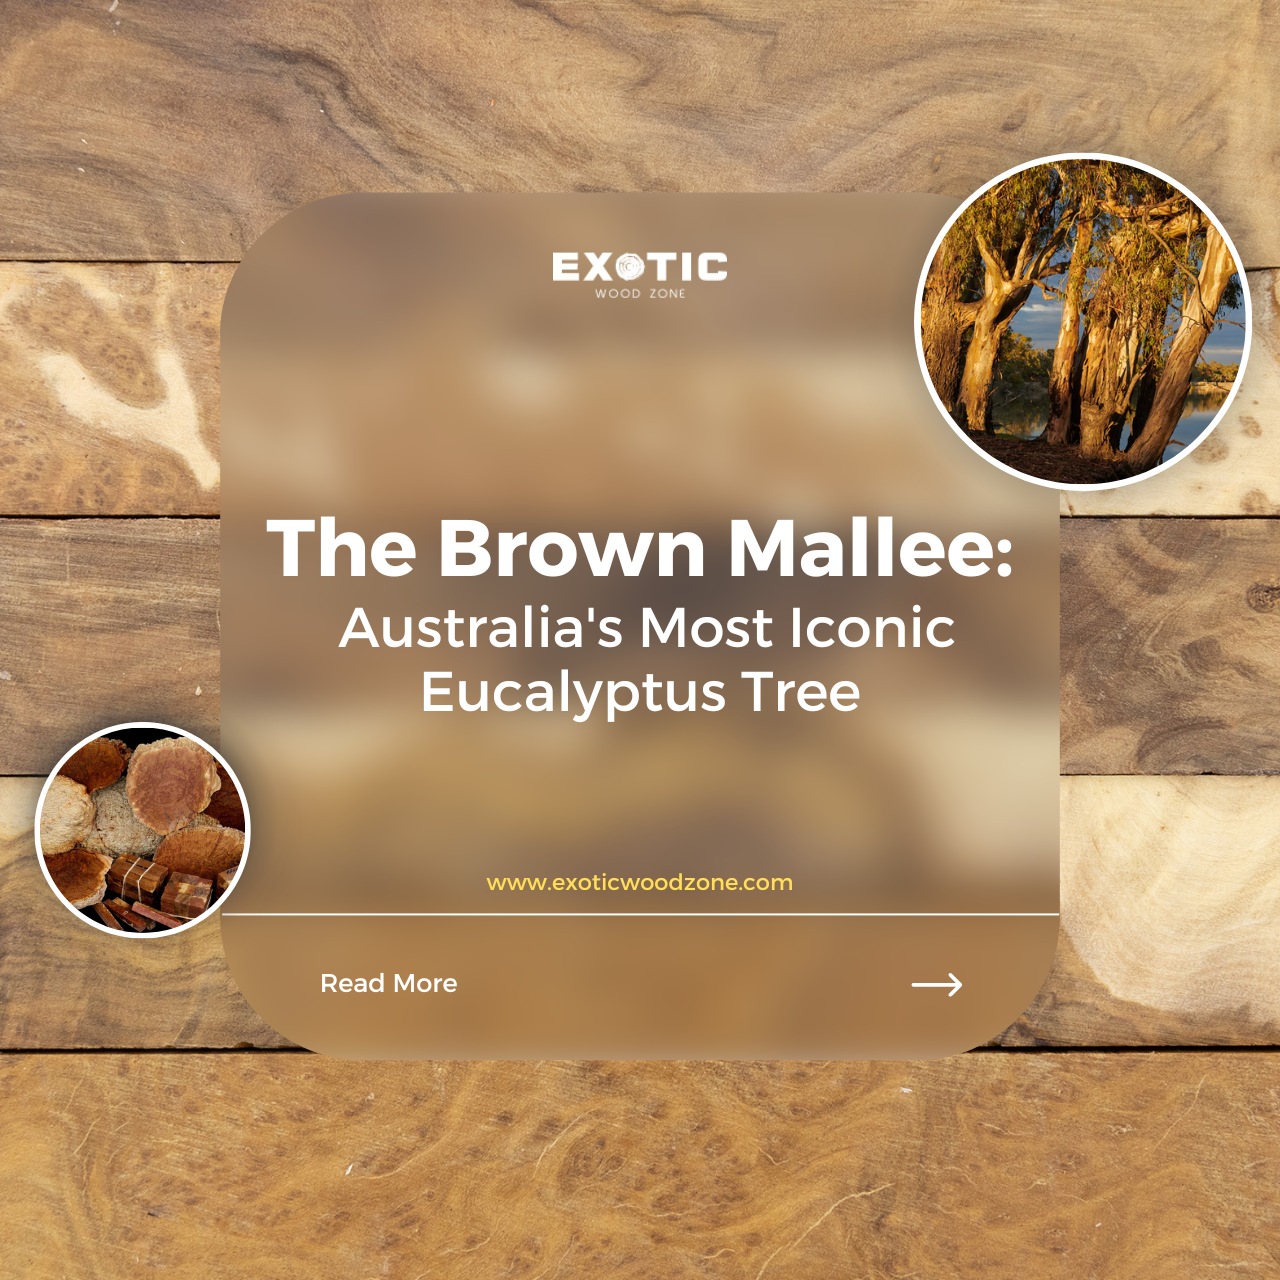 The Brown Mallee: Australia’s Most Iconic Eucalyptus Tree